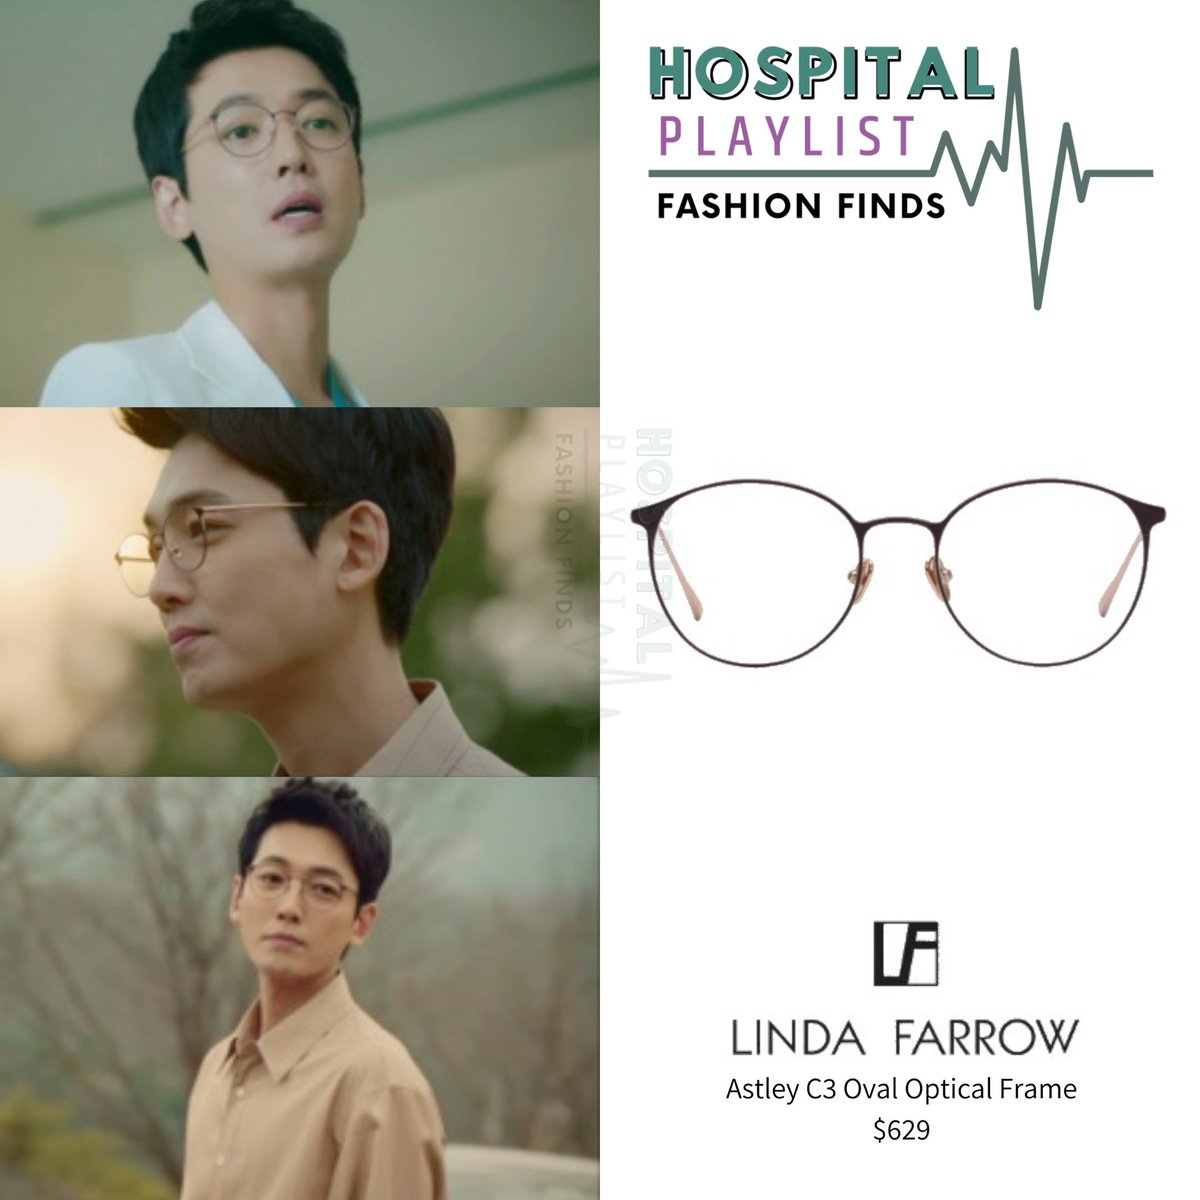 Hospital Playlist Episode 3-4 Jung Kyung Ho wearing #LINDAFARROW — Astley C3 Oval Optical Frame, $629⠀ 🔗 rb.gy/4kic4t - #슬기로운의사생활 #정경호 #정경호패션 #JungKyunghoFashion #HospitalPlaylistFashionFinds #HPFFJungKyungHo